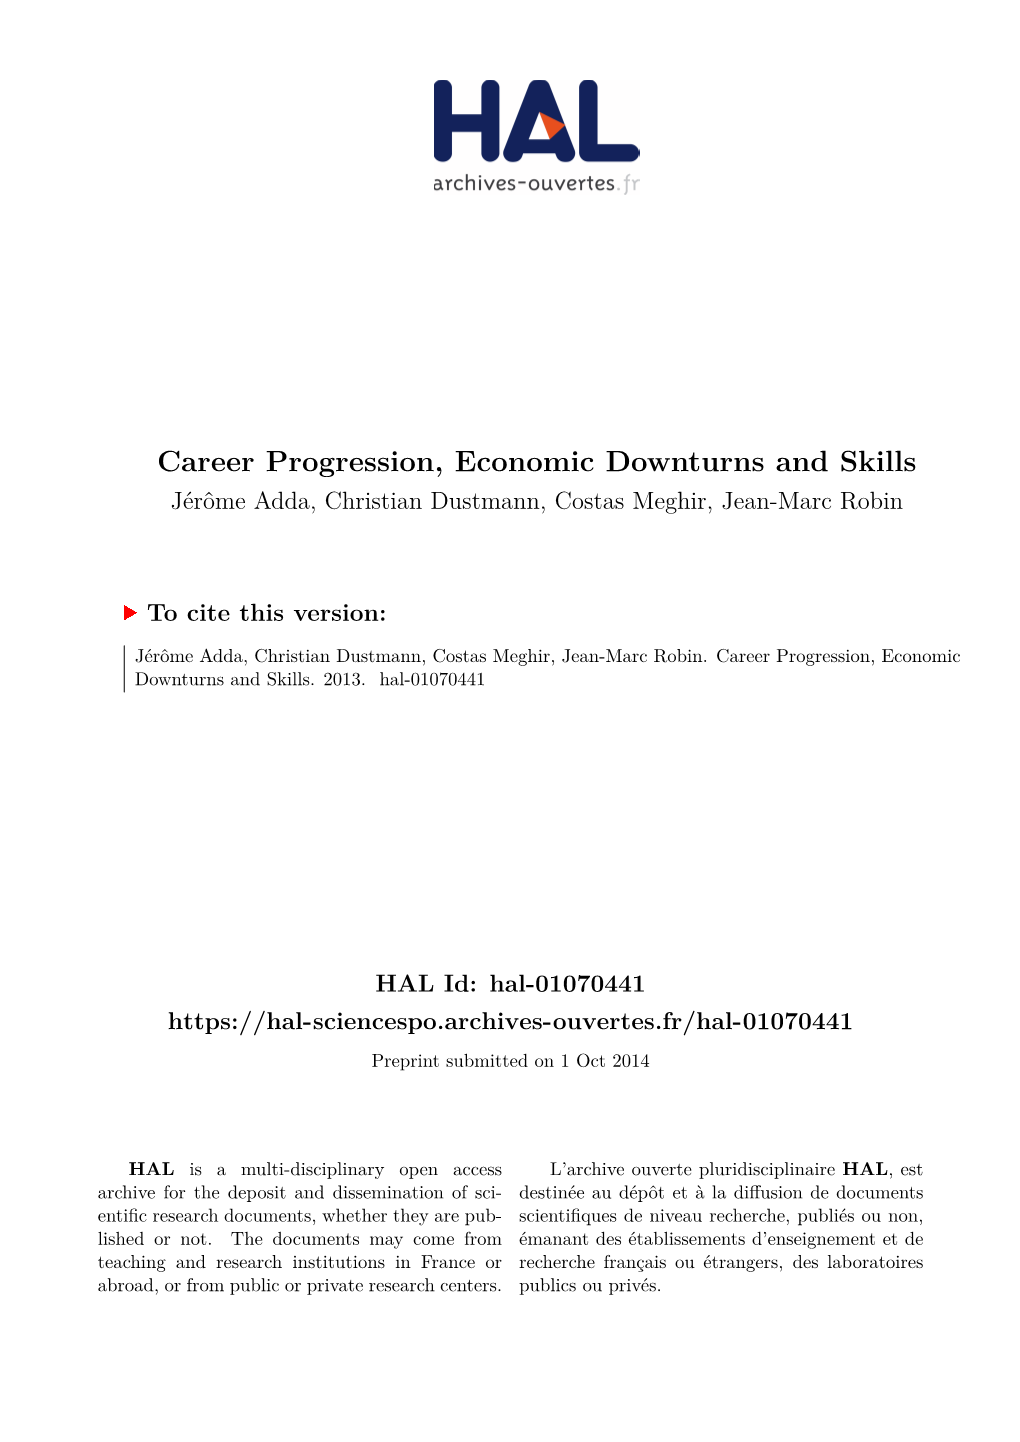 Career Progression, Economic Downturns and Skills Jérôme Adda, Christian Dustmann, Costas Meghir, Jean-Marc Robin